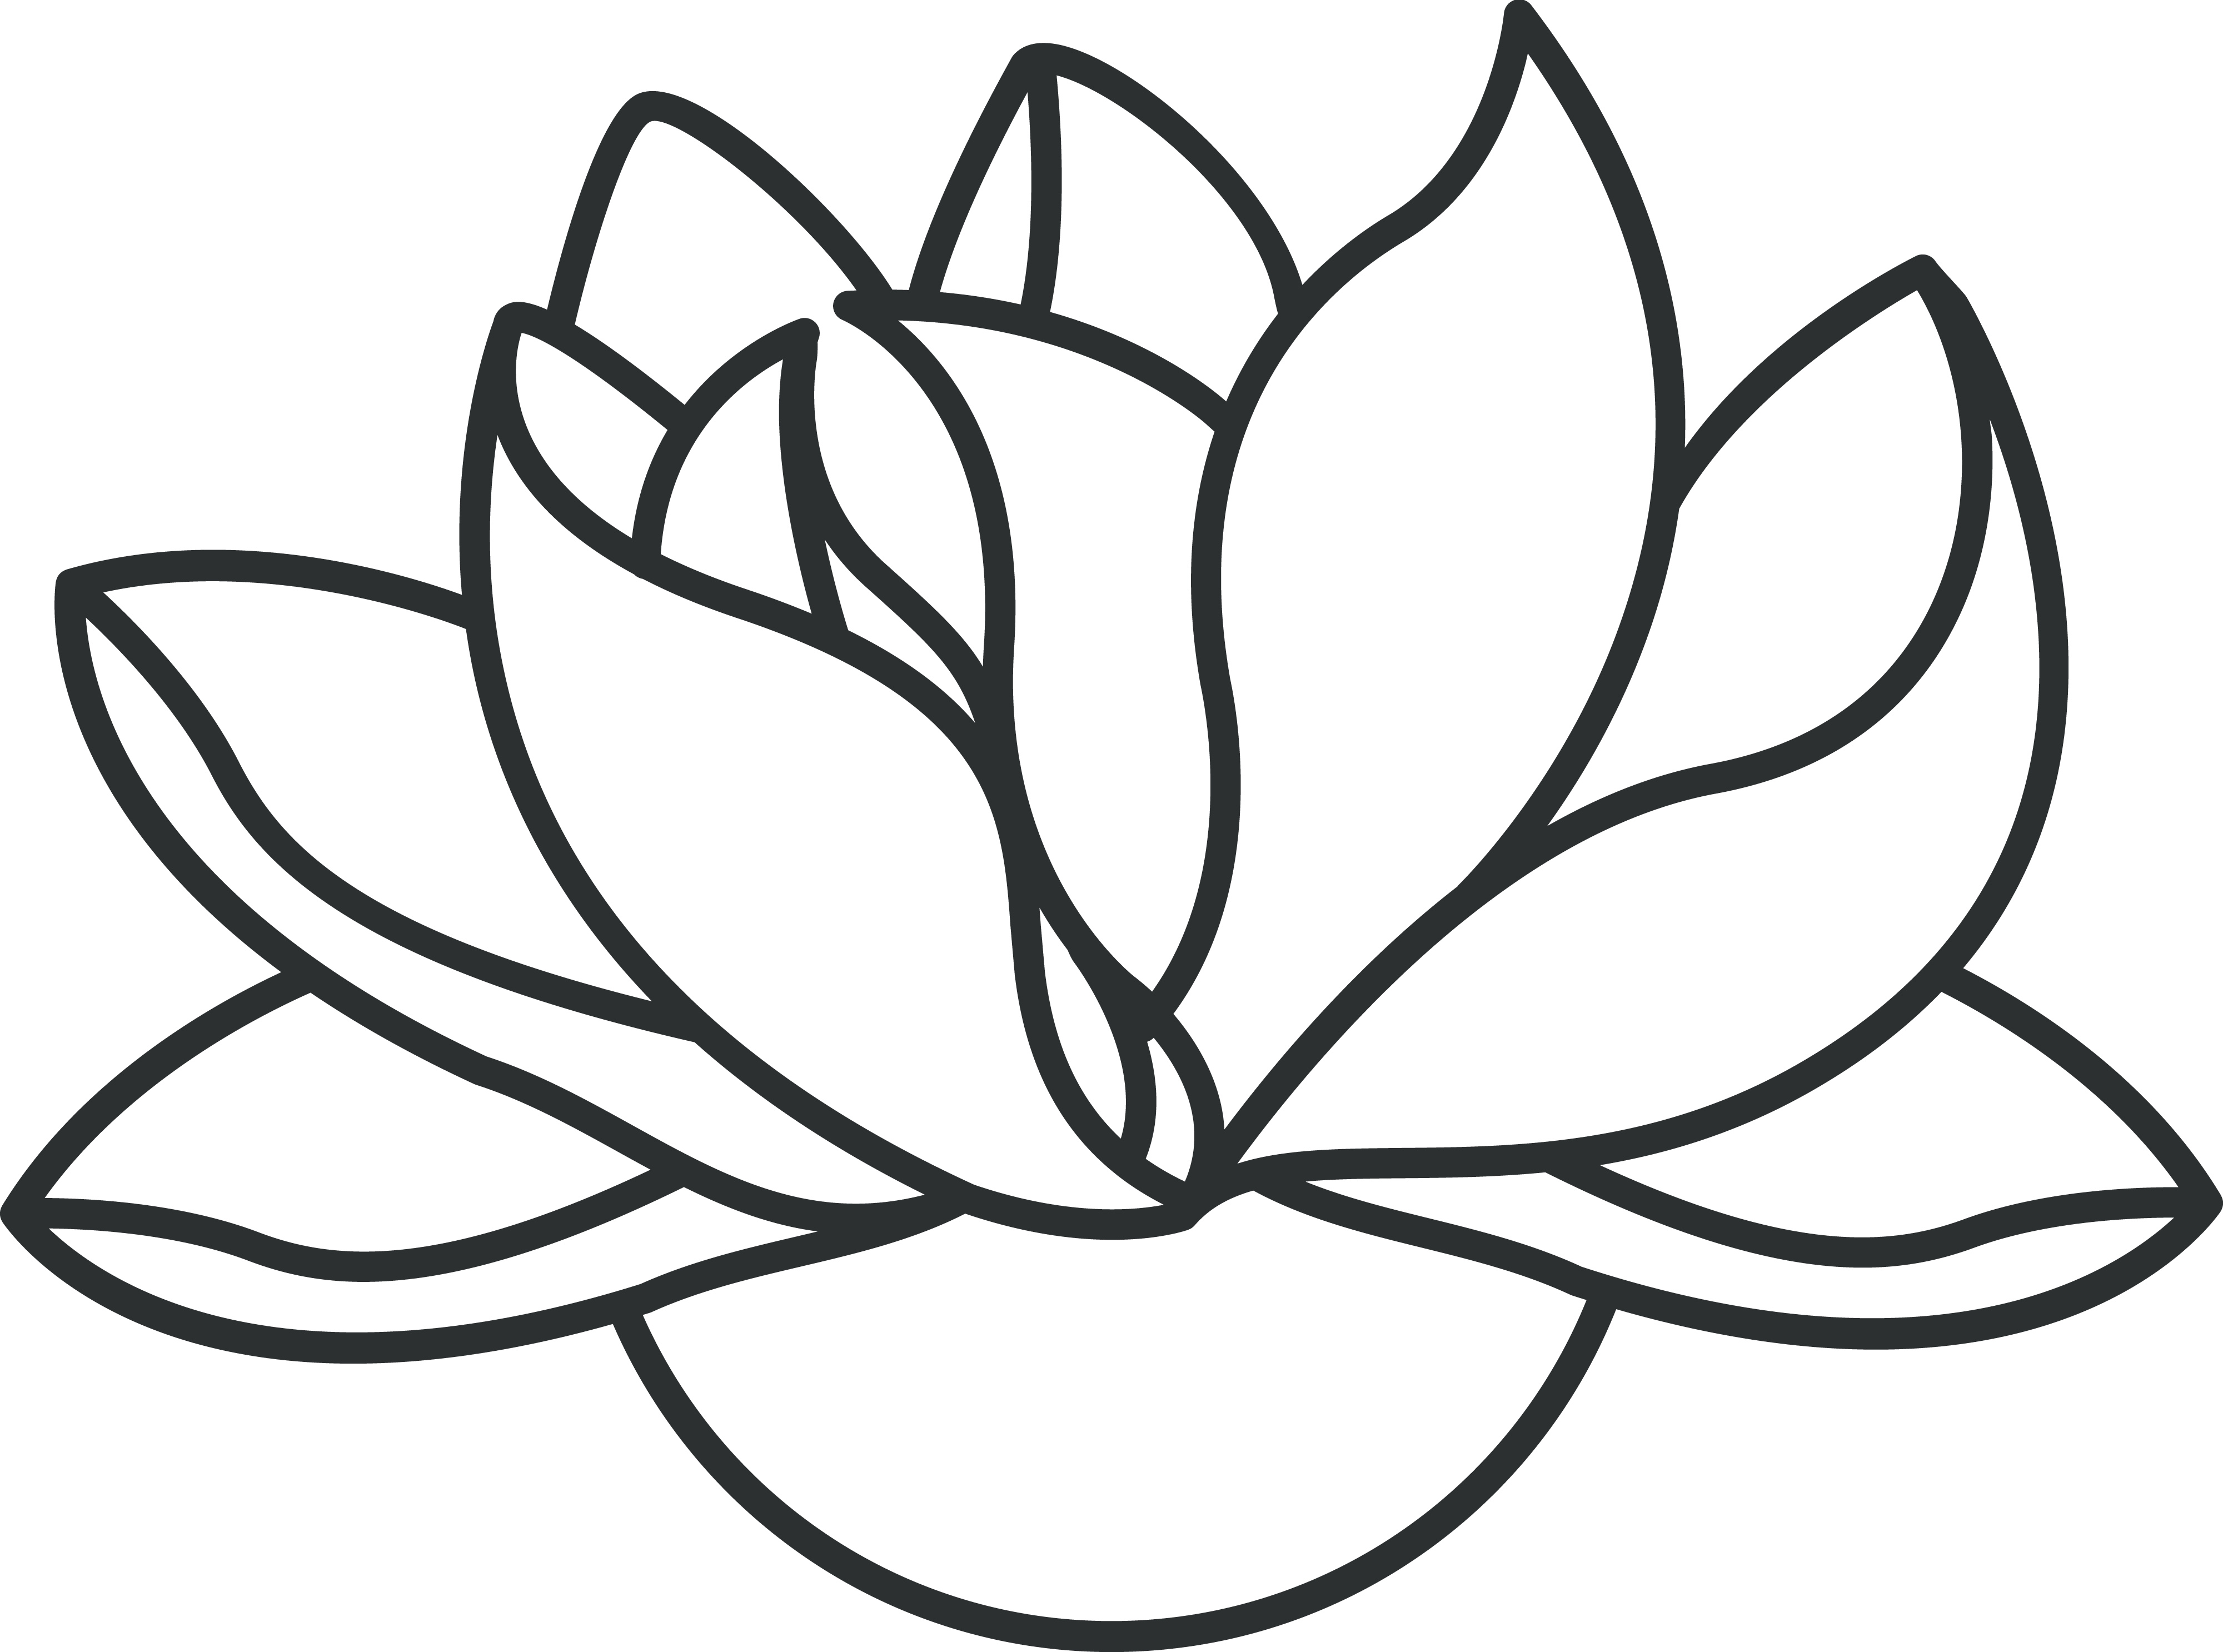 1000+ images about Tattoo | Spirit yoga, Buddhists ...